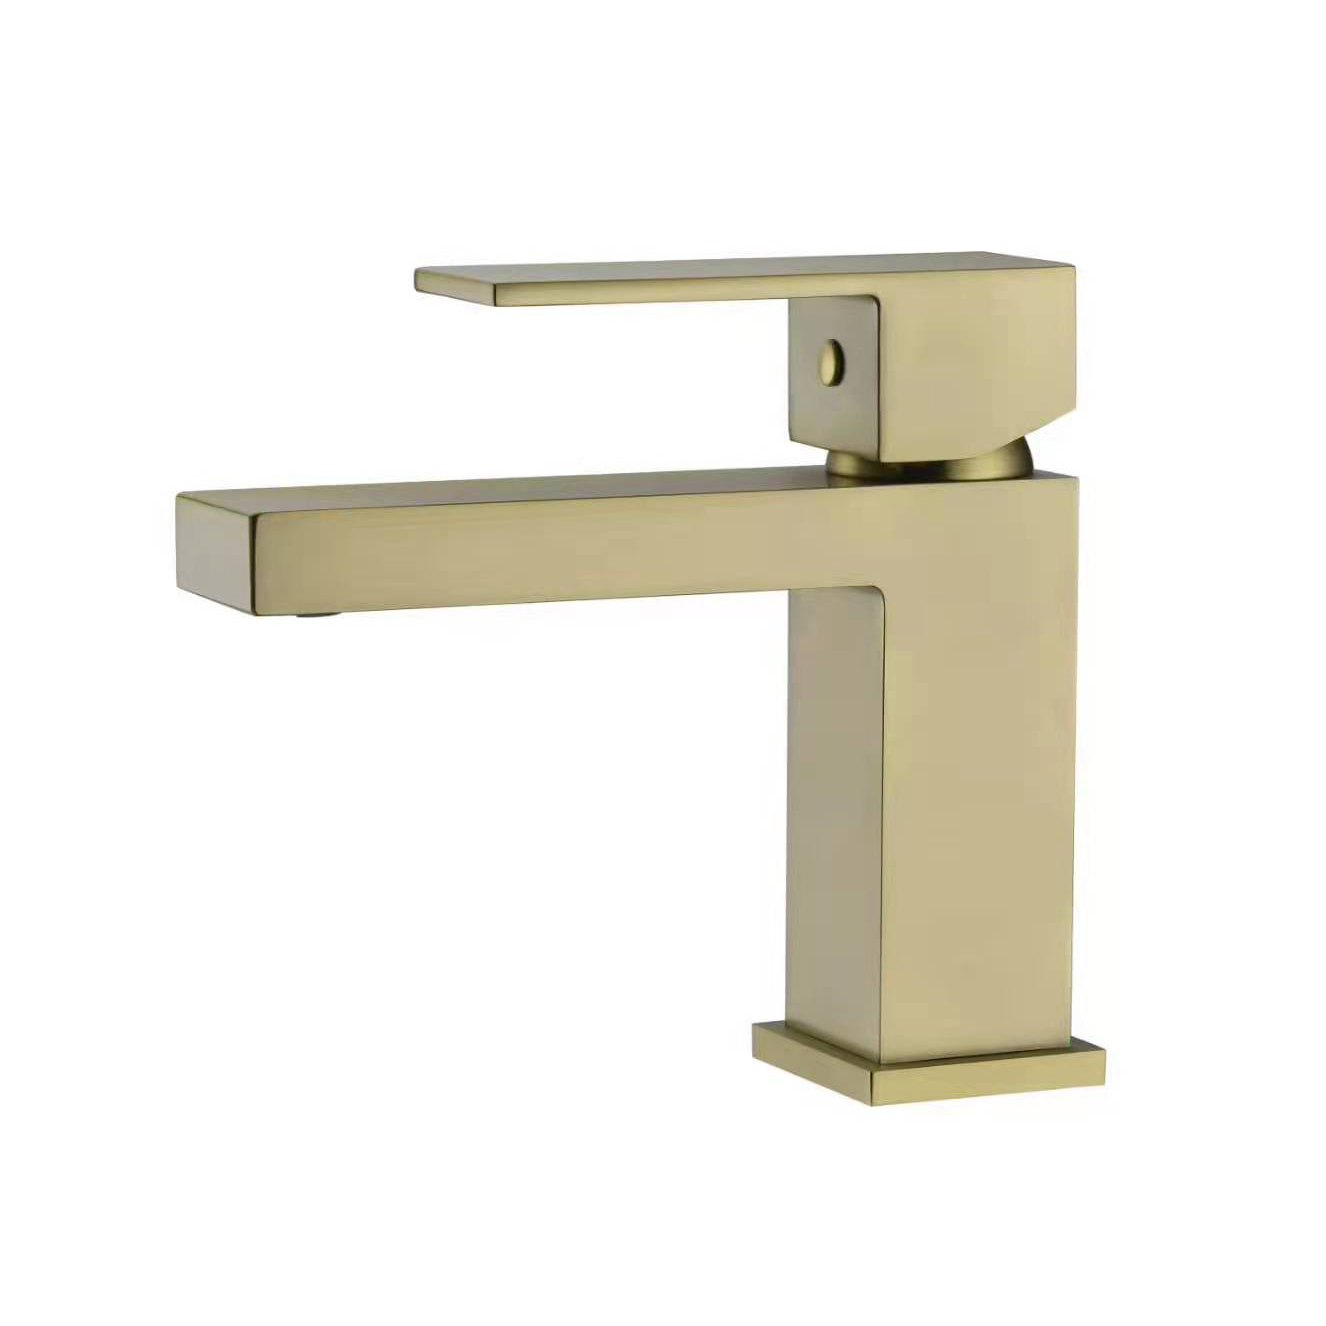 Wholesale Bathroom Bath Faucet Copper Single Lever Basin Water Tap Torneira Monocomando Banheiro